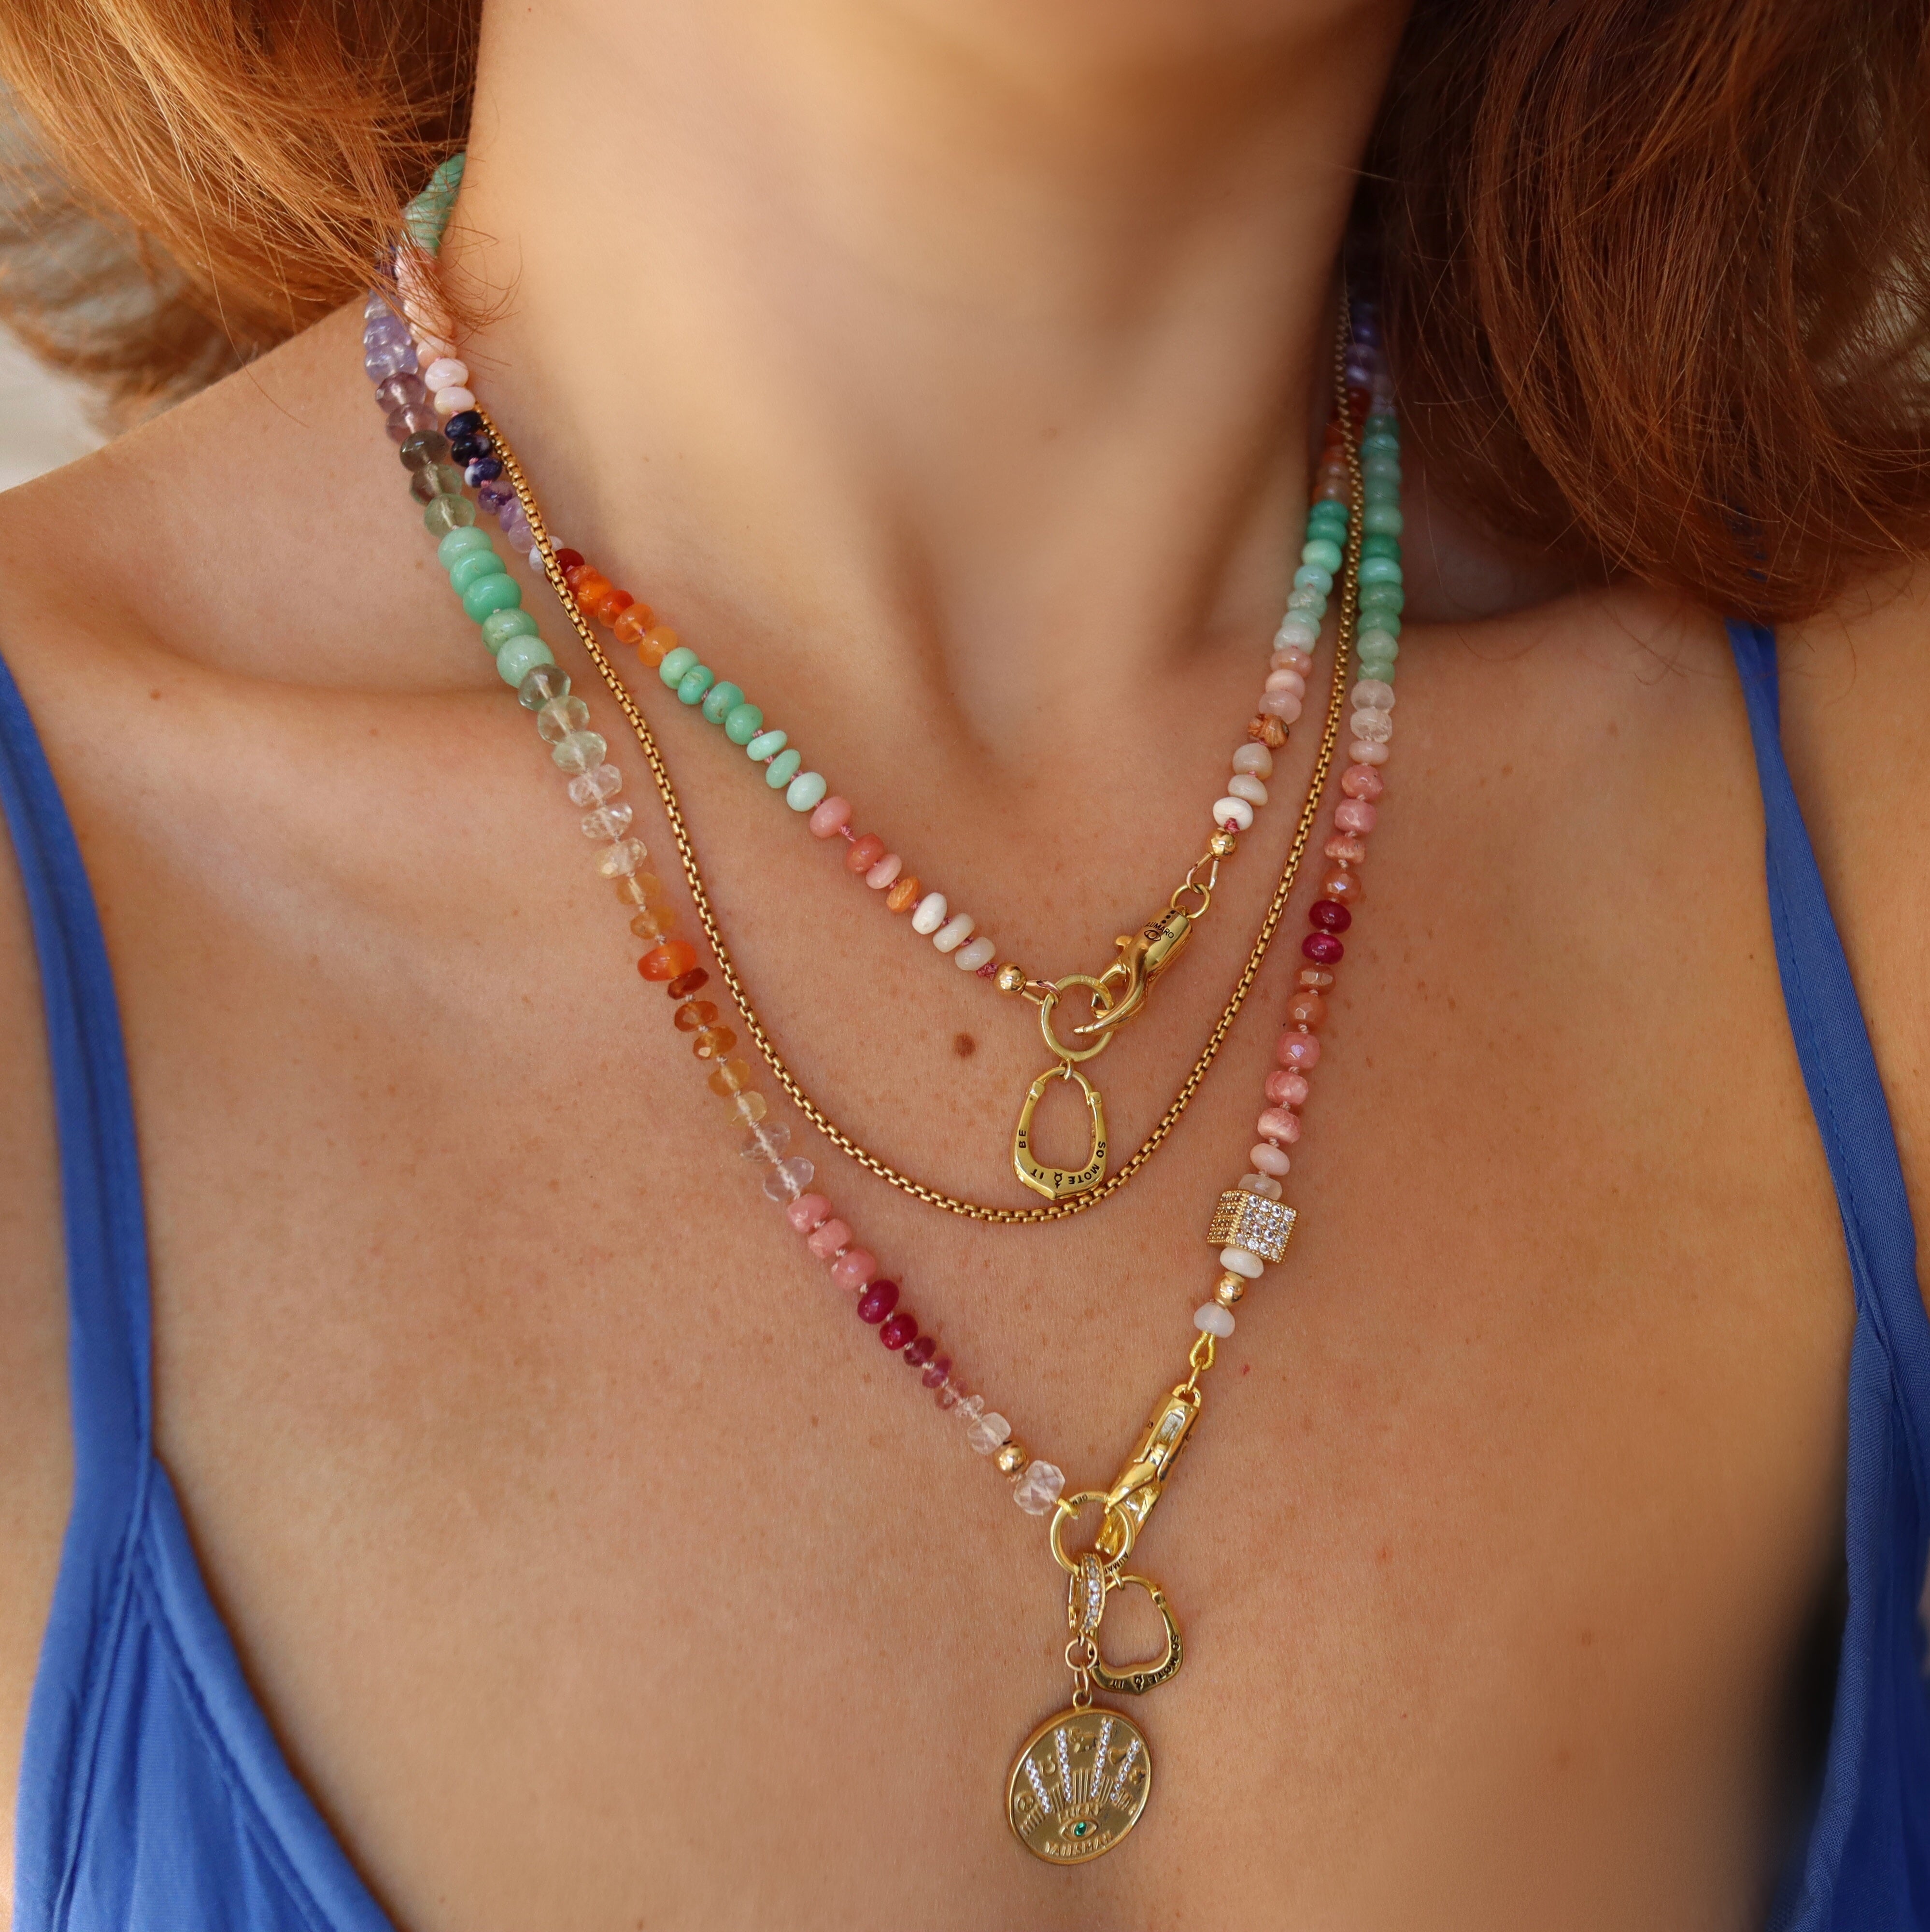 25 Coolest Candy Jewelry to Wear - Lel Jewelry Blog